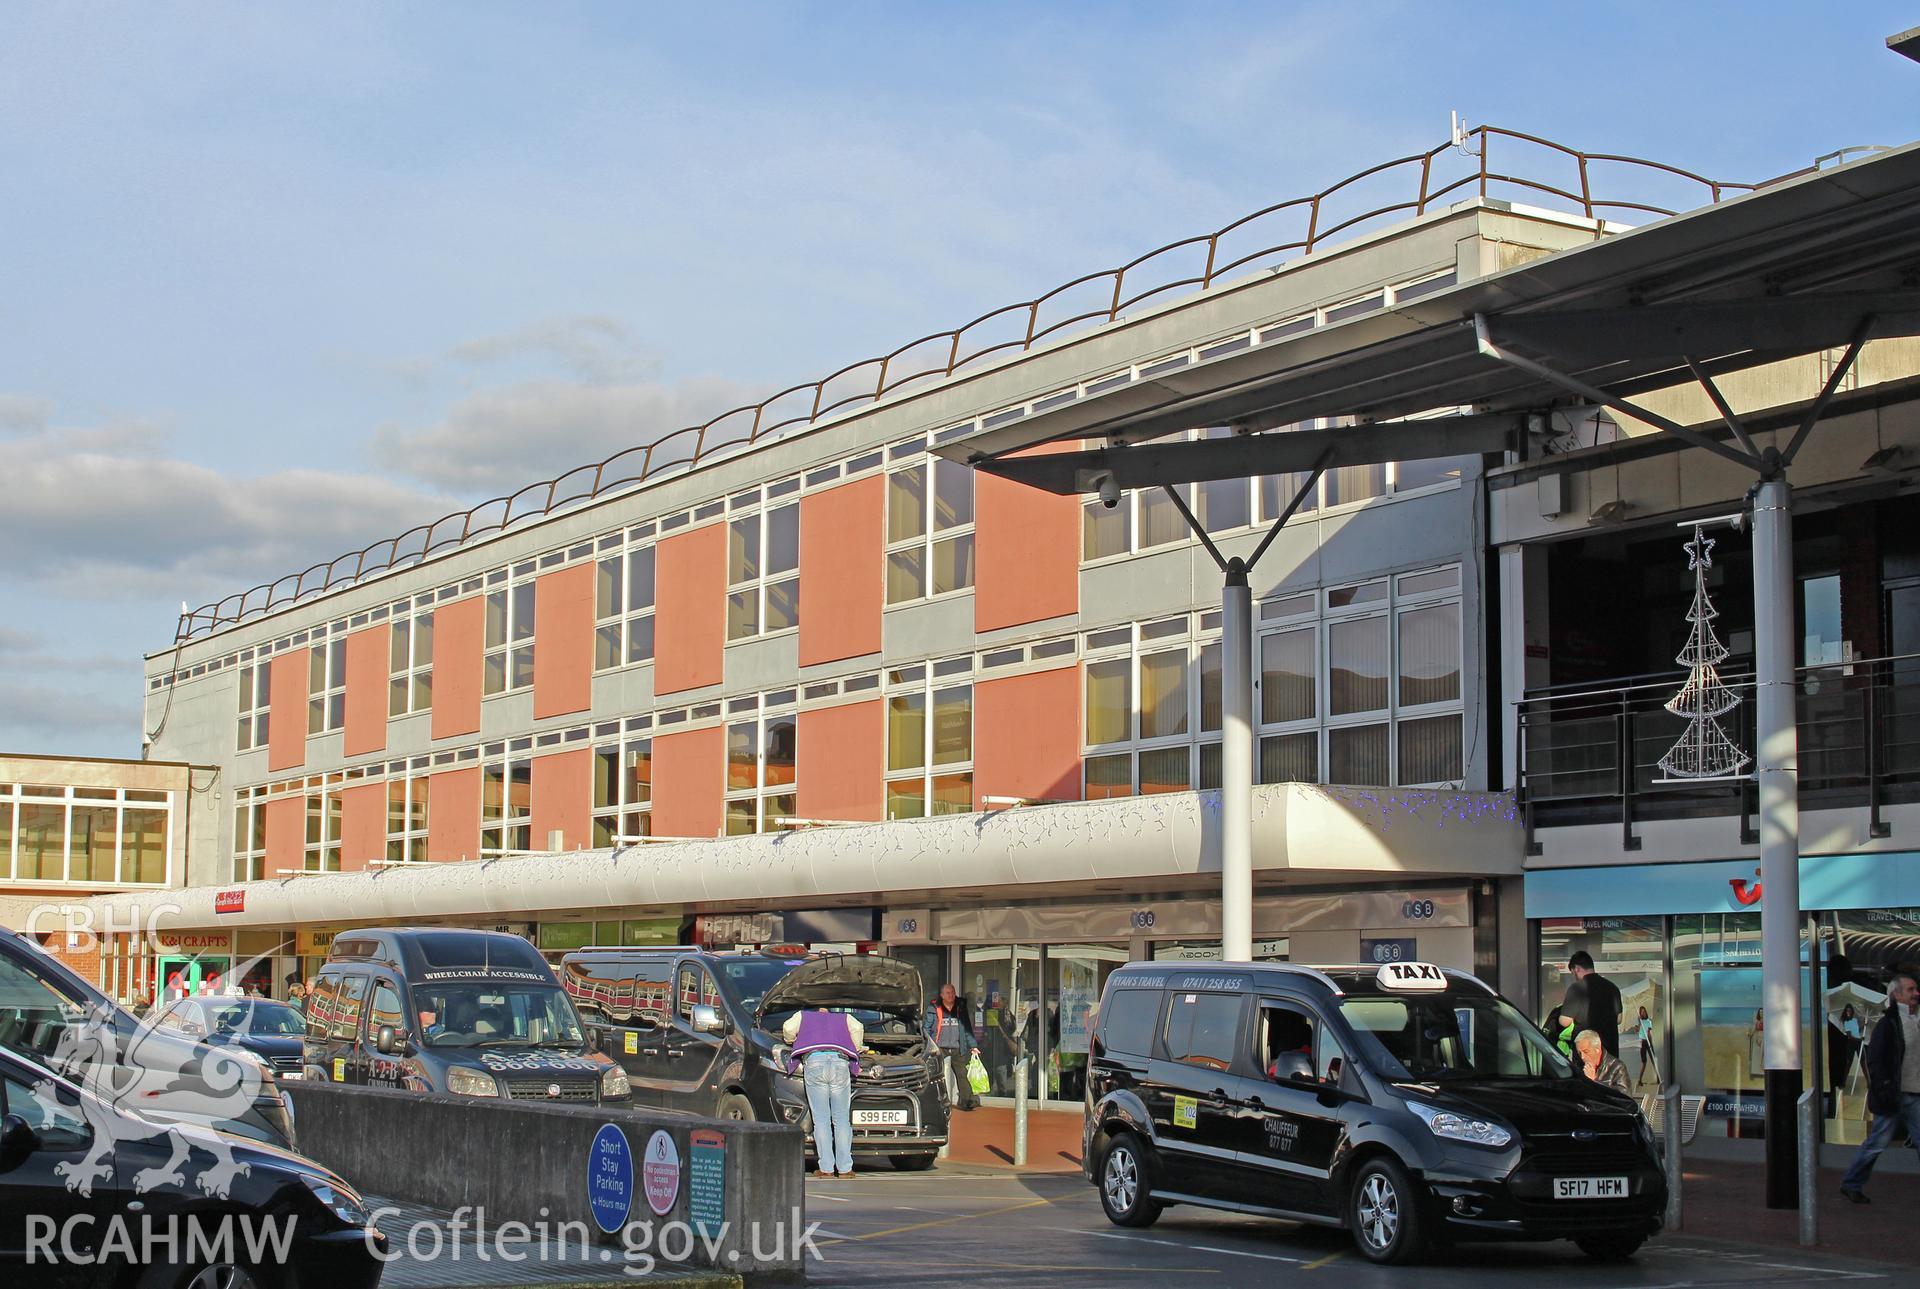 Exterior view of Cwmbran Shopping Centre. Photograph taken by Sue Fielding in November 2017.